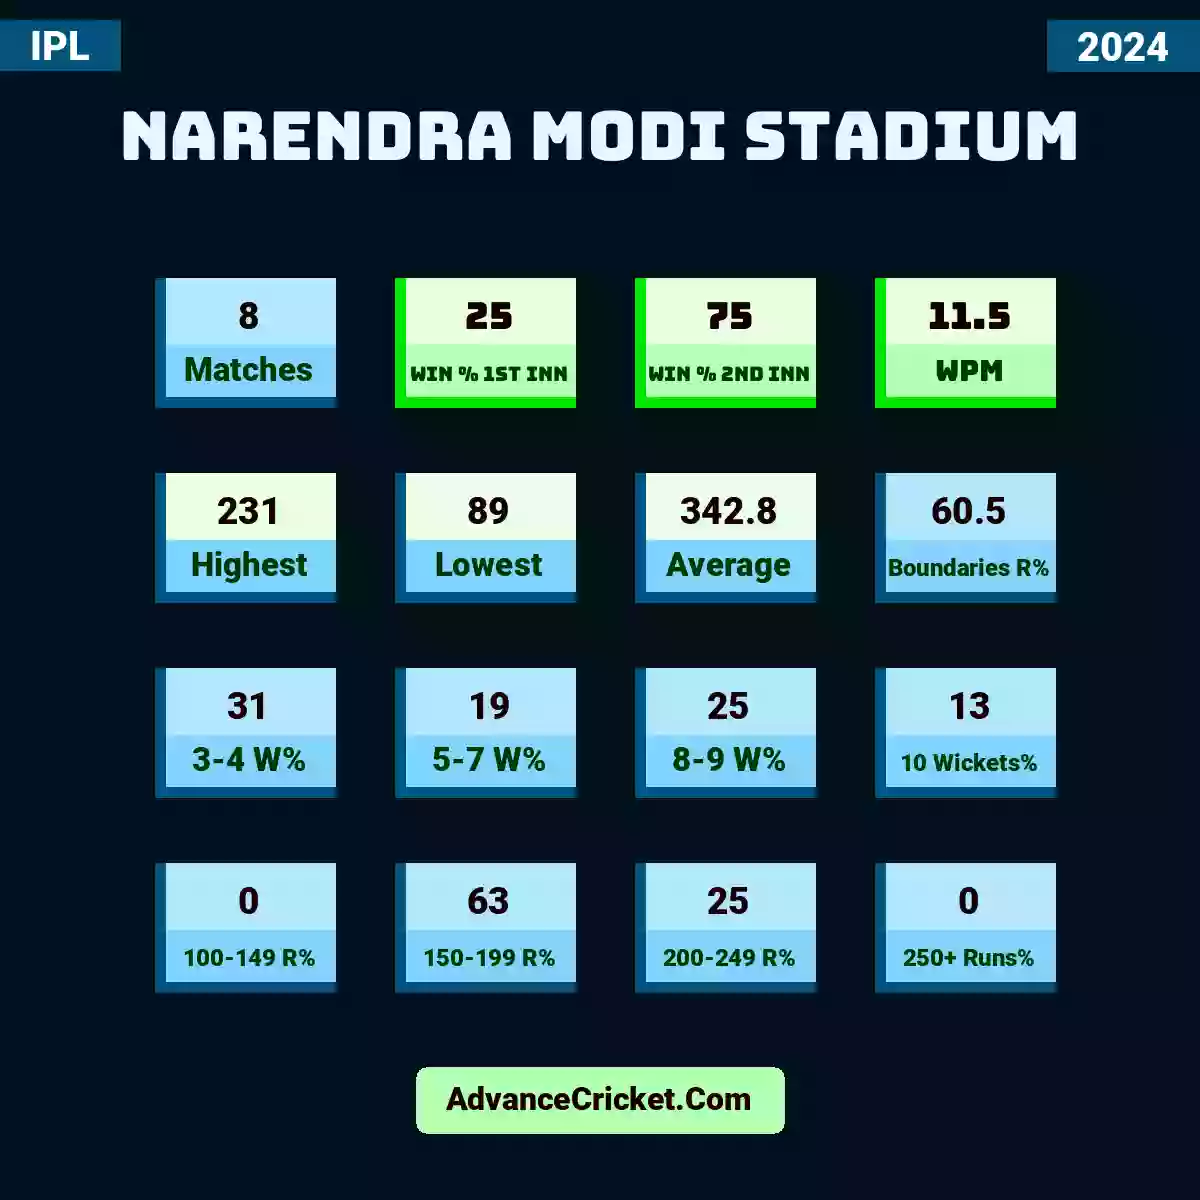 Image showing Narendra Modi Stadium IPL 2024 with Matches: 5, Win % 1st Inn: 20, Win % 2nd Inn: 80, WPM: 11, Highest: 206, Lowest: 89, Average: 329.2, Boundaries R%: 58.4, 3-4 W%: 40, 5-7 W%: 20, 8-9 W%: 20, 10 Wickets%: 10, 100-149 R%: 0, 150-199 R%: 50, 200-249 R%: 30, 250+ Runs%: 0.